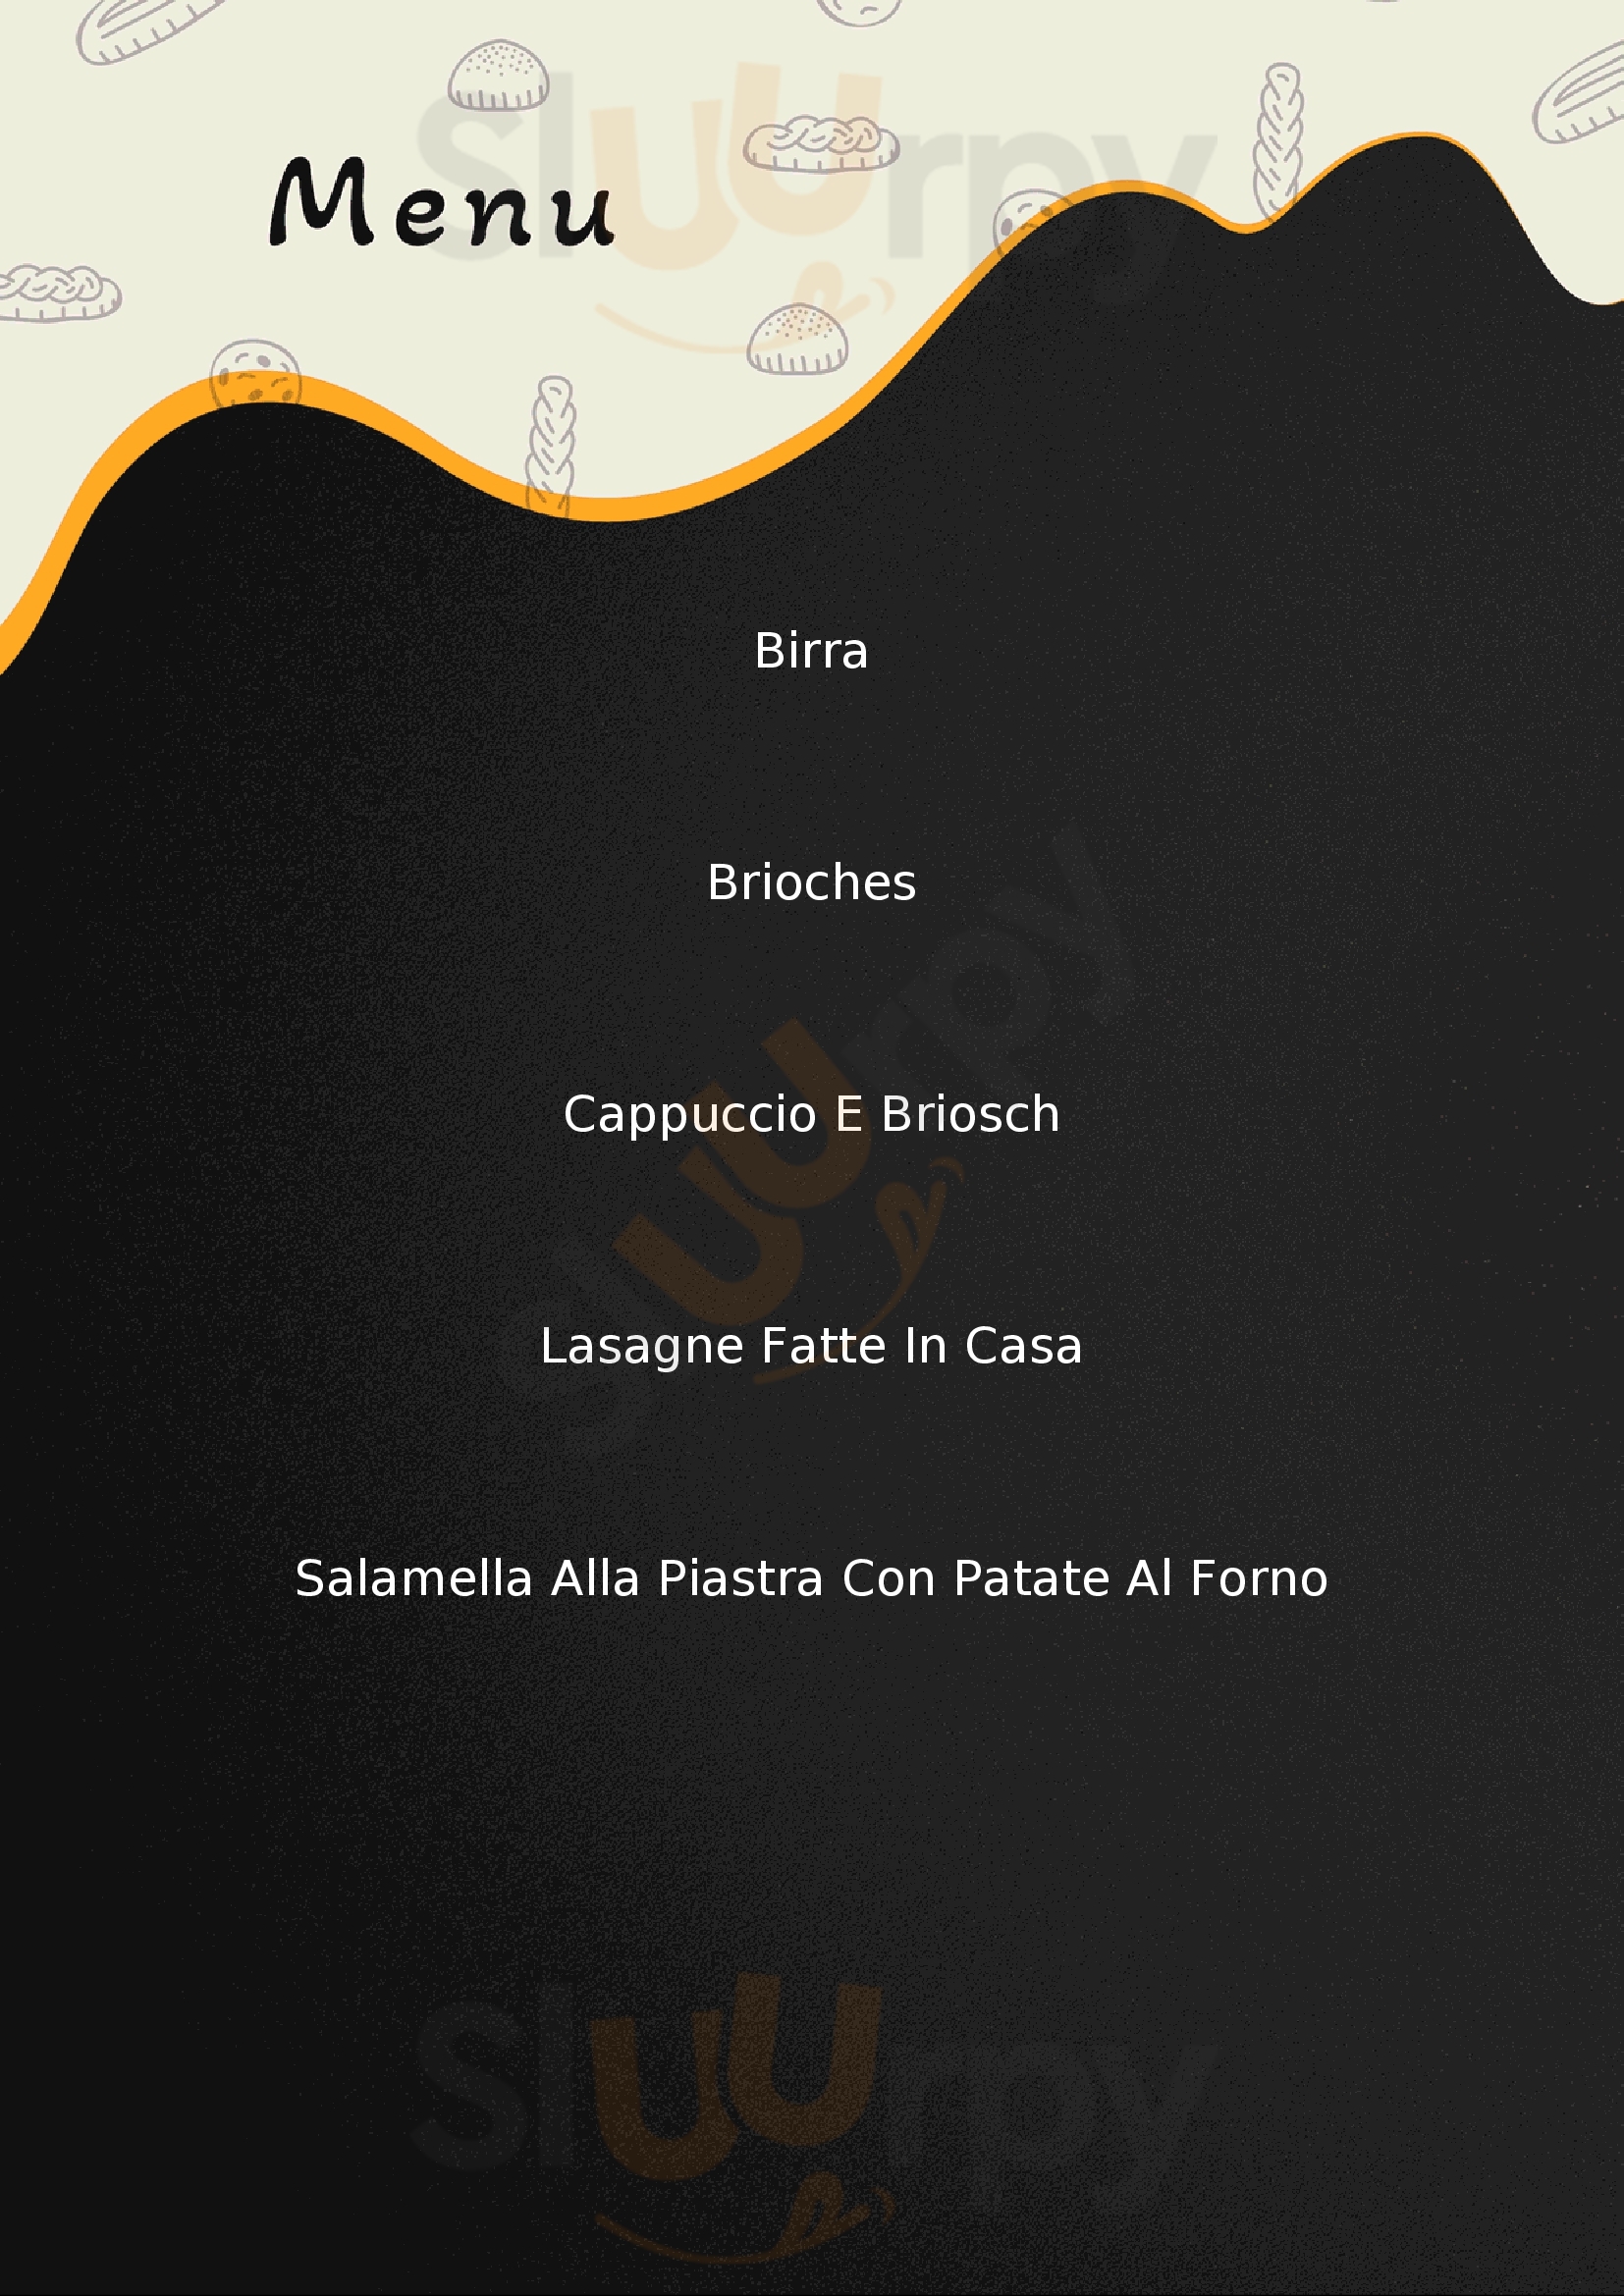 Upupa Coffee Wine Restaurant Breno menù 1 pagina